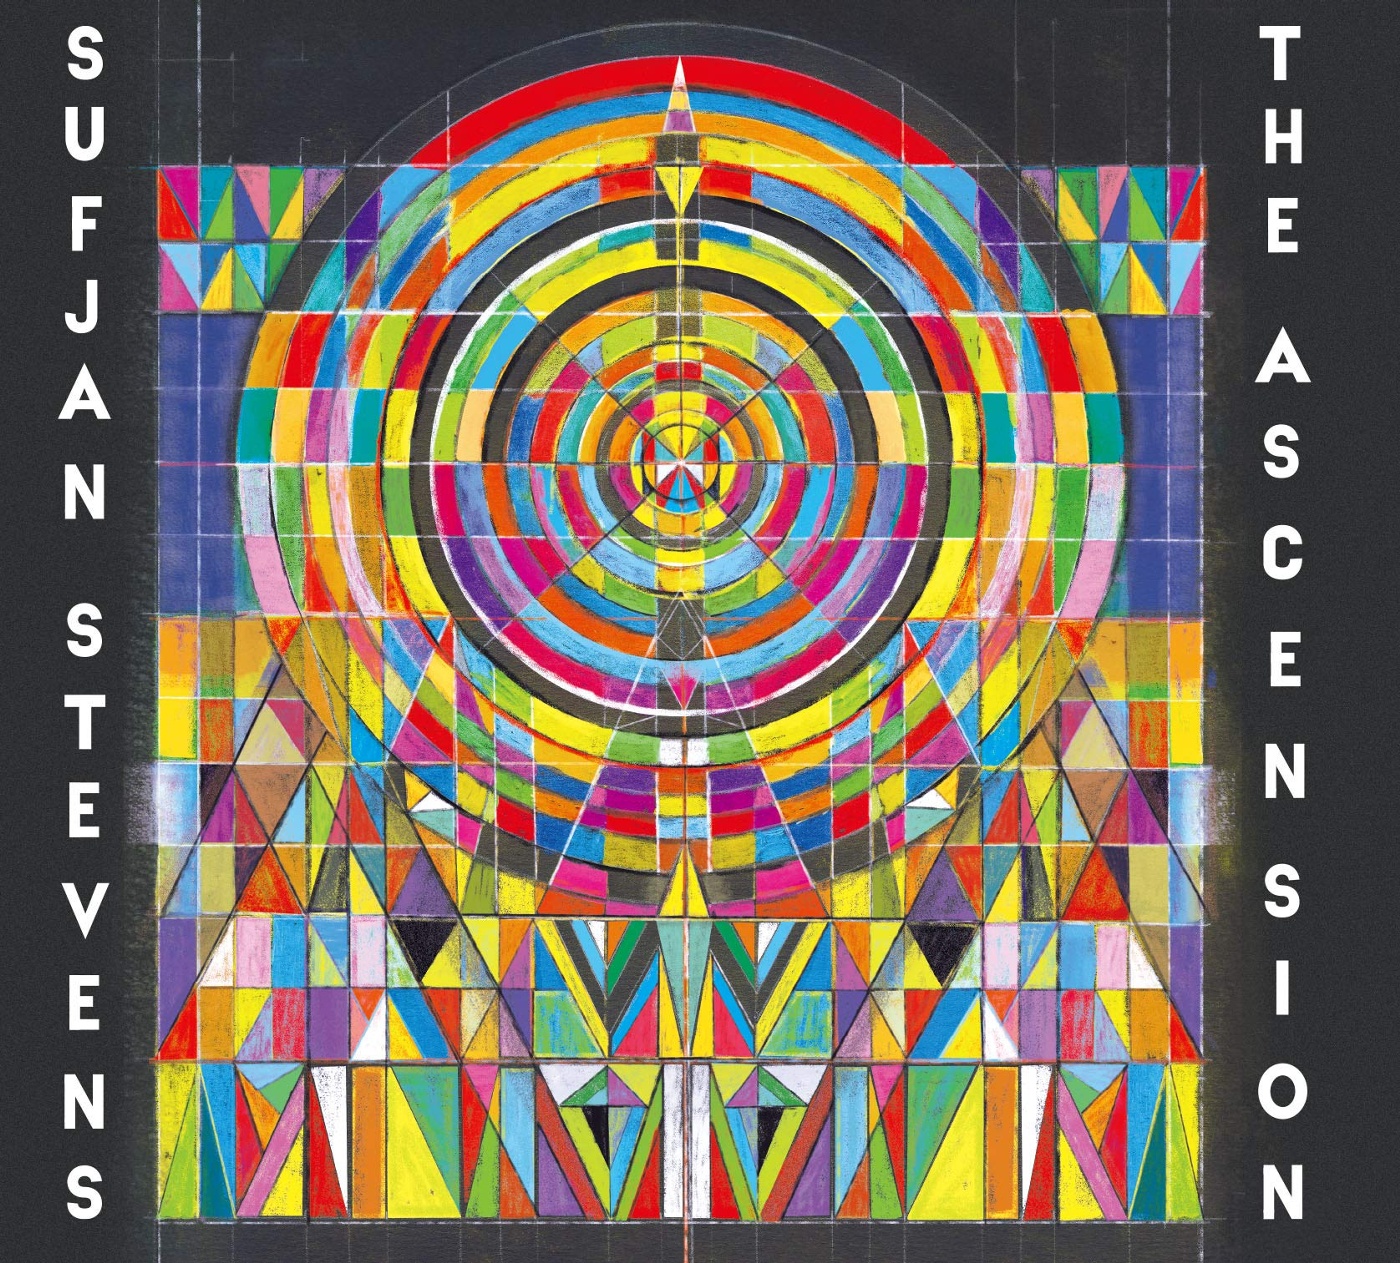 Купить альбом Sufjan Stevens: The Ascension, CD (Japan-import) на компакт-д...